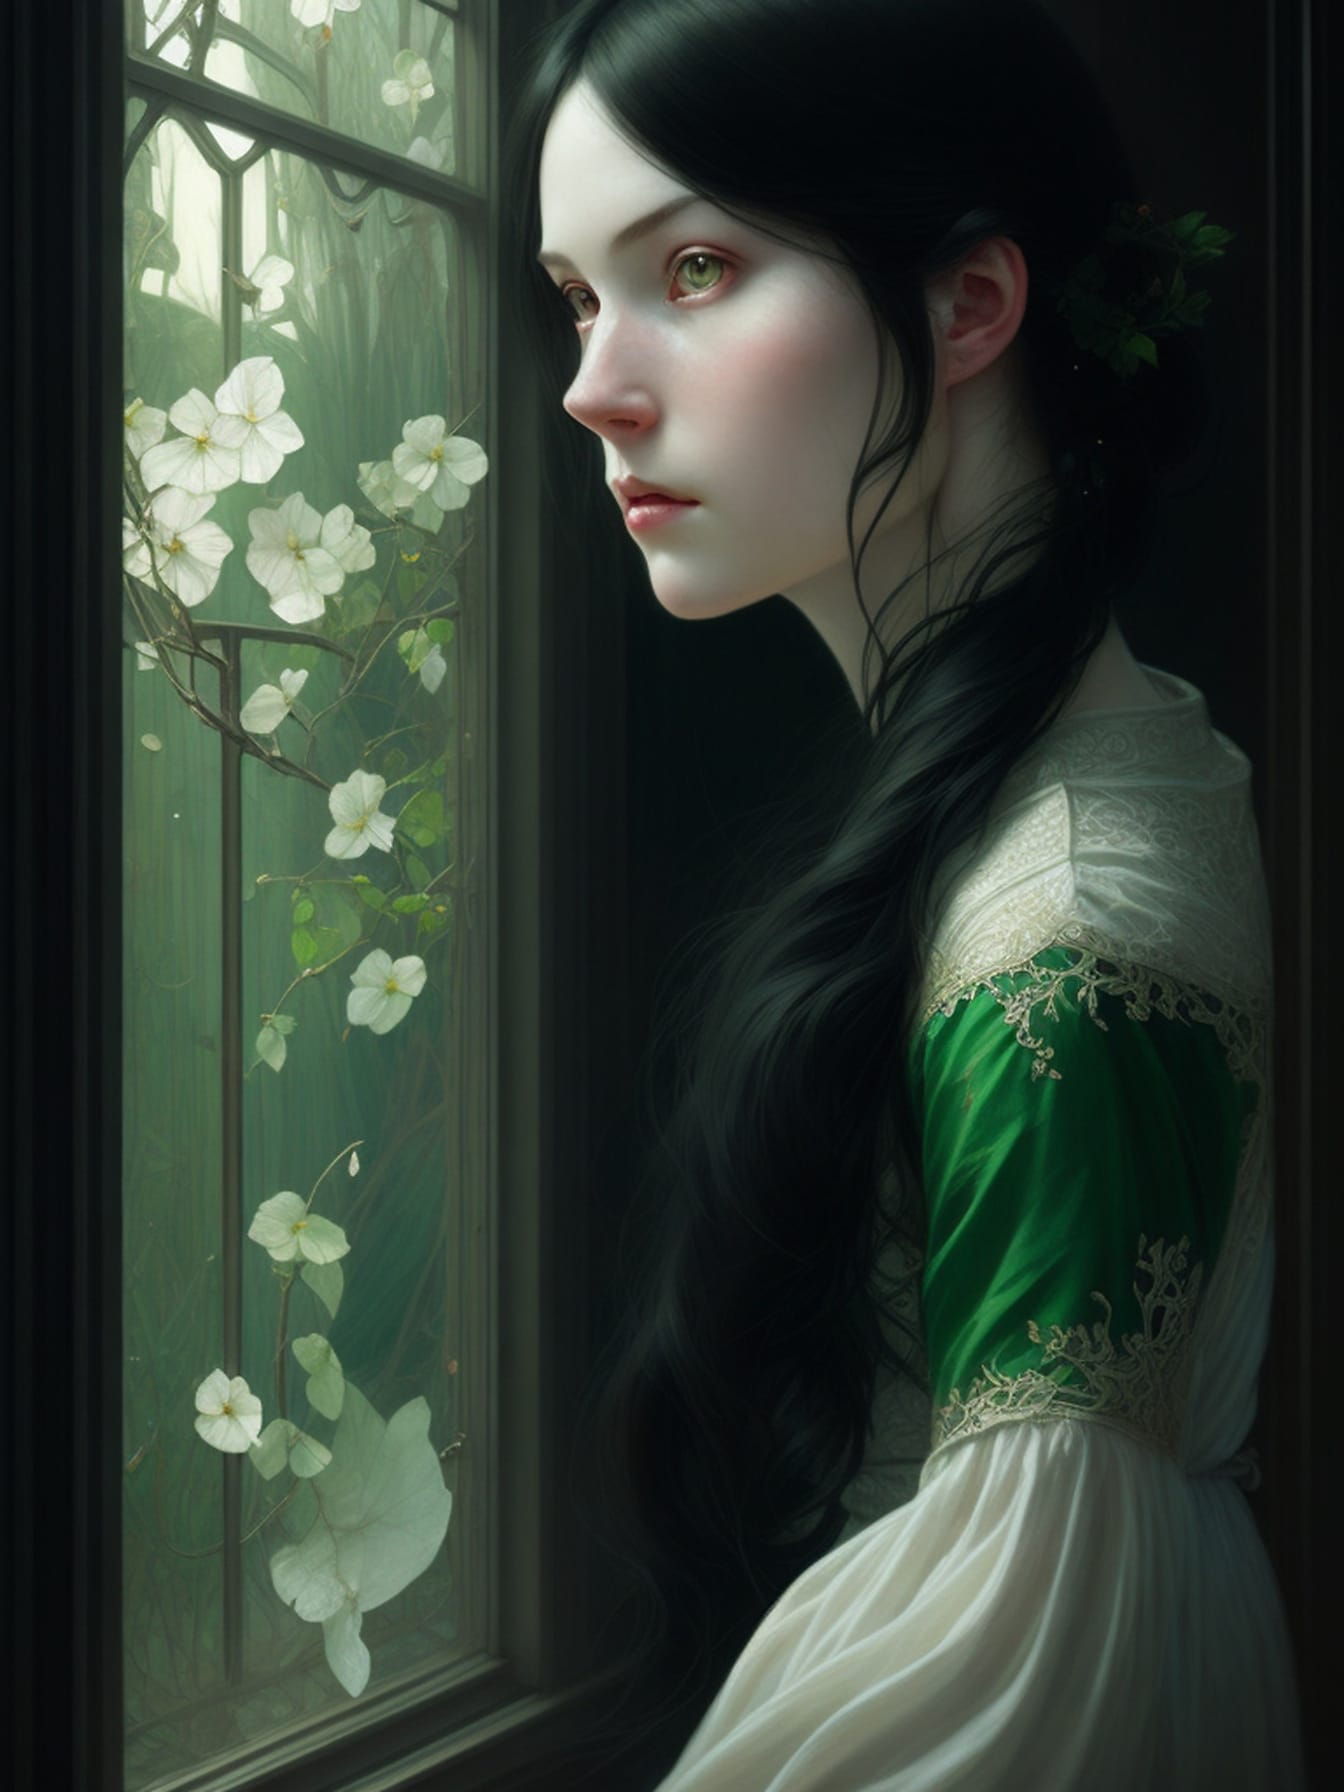 Portret fantezist al unei fete frumoase medievale cu păr lung și negru